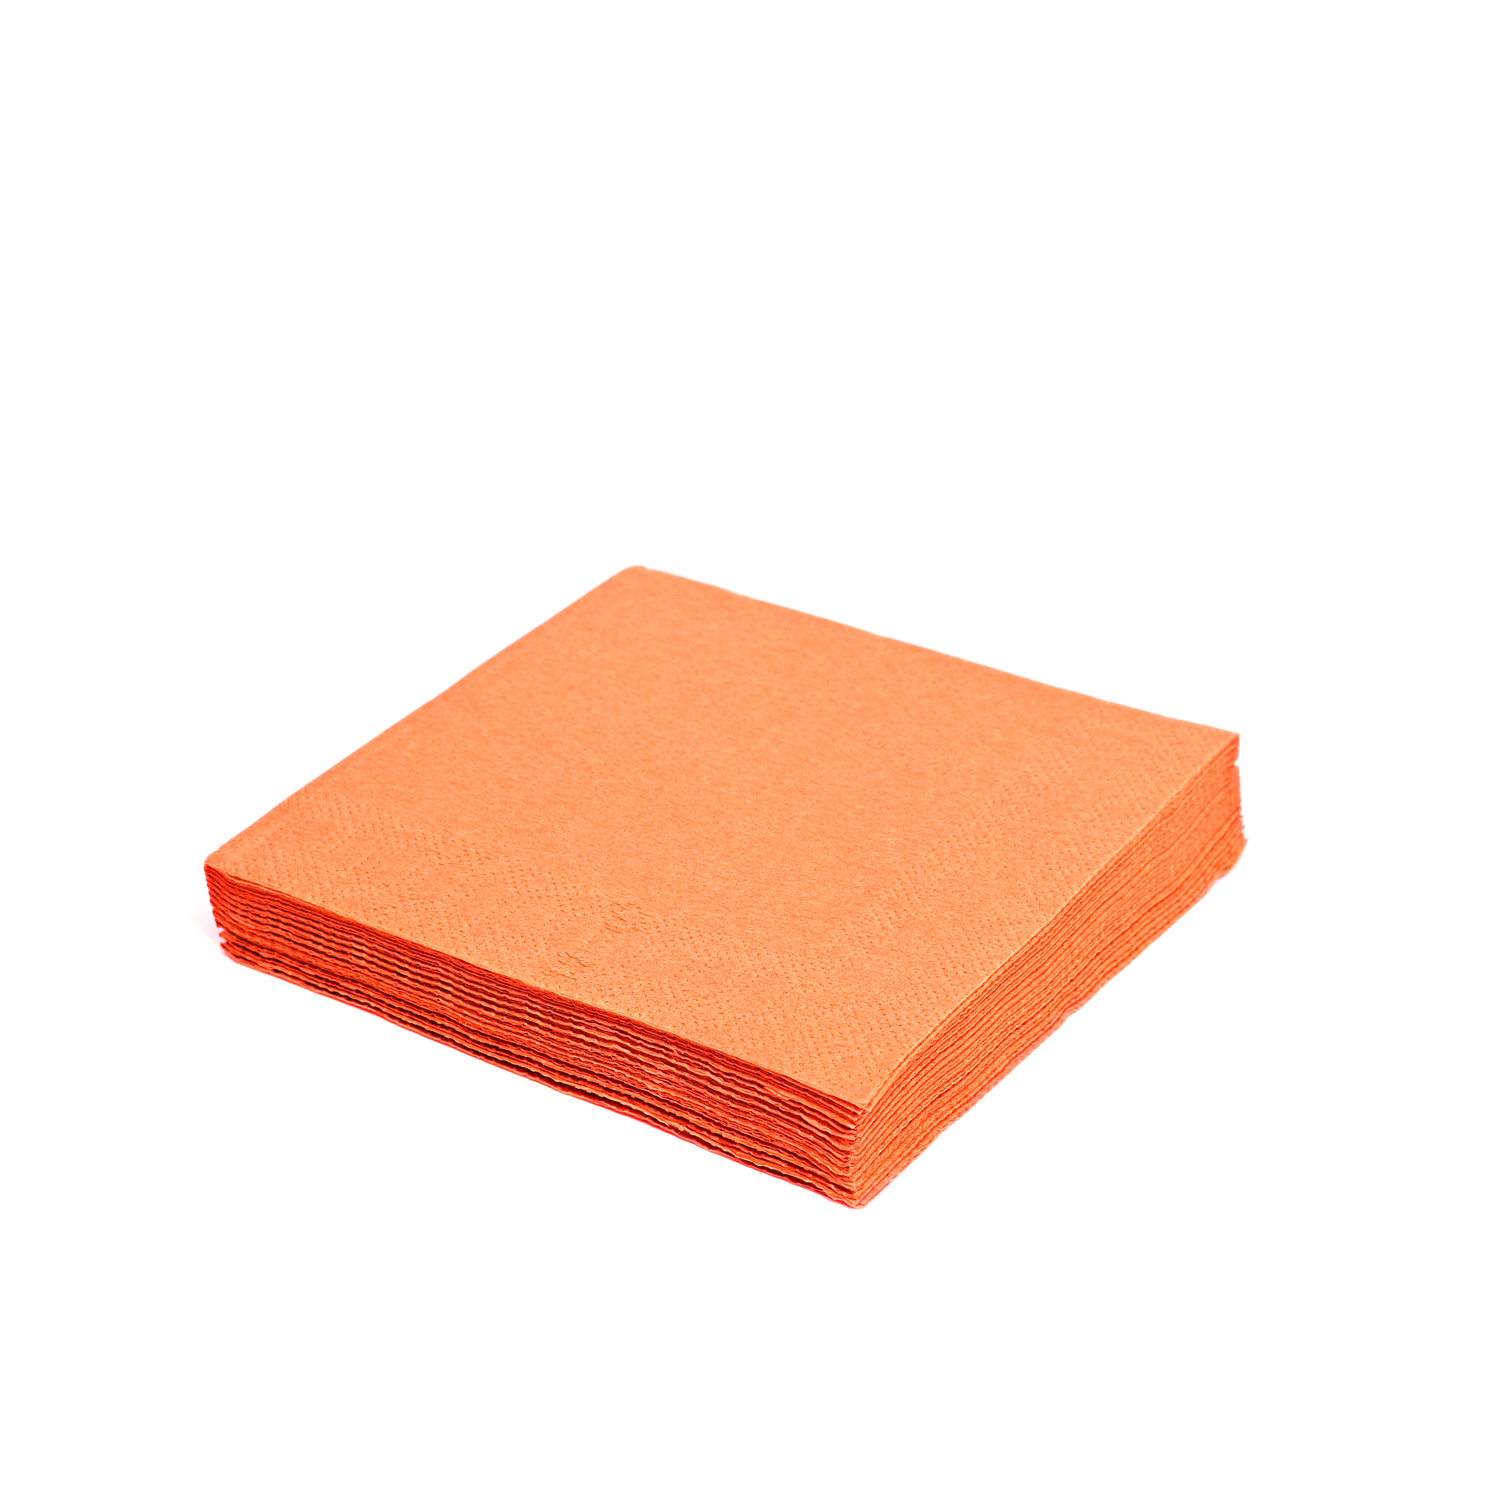 Serviette 33x33cm, 3-lagig, 1/4-Falz, orange, (6x250) 1500 Stück/Karton